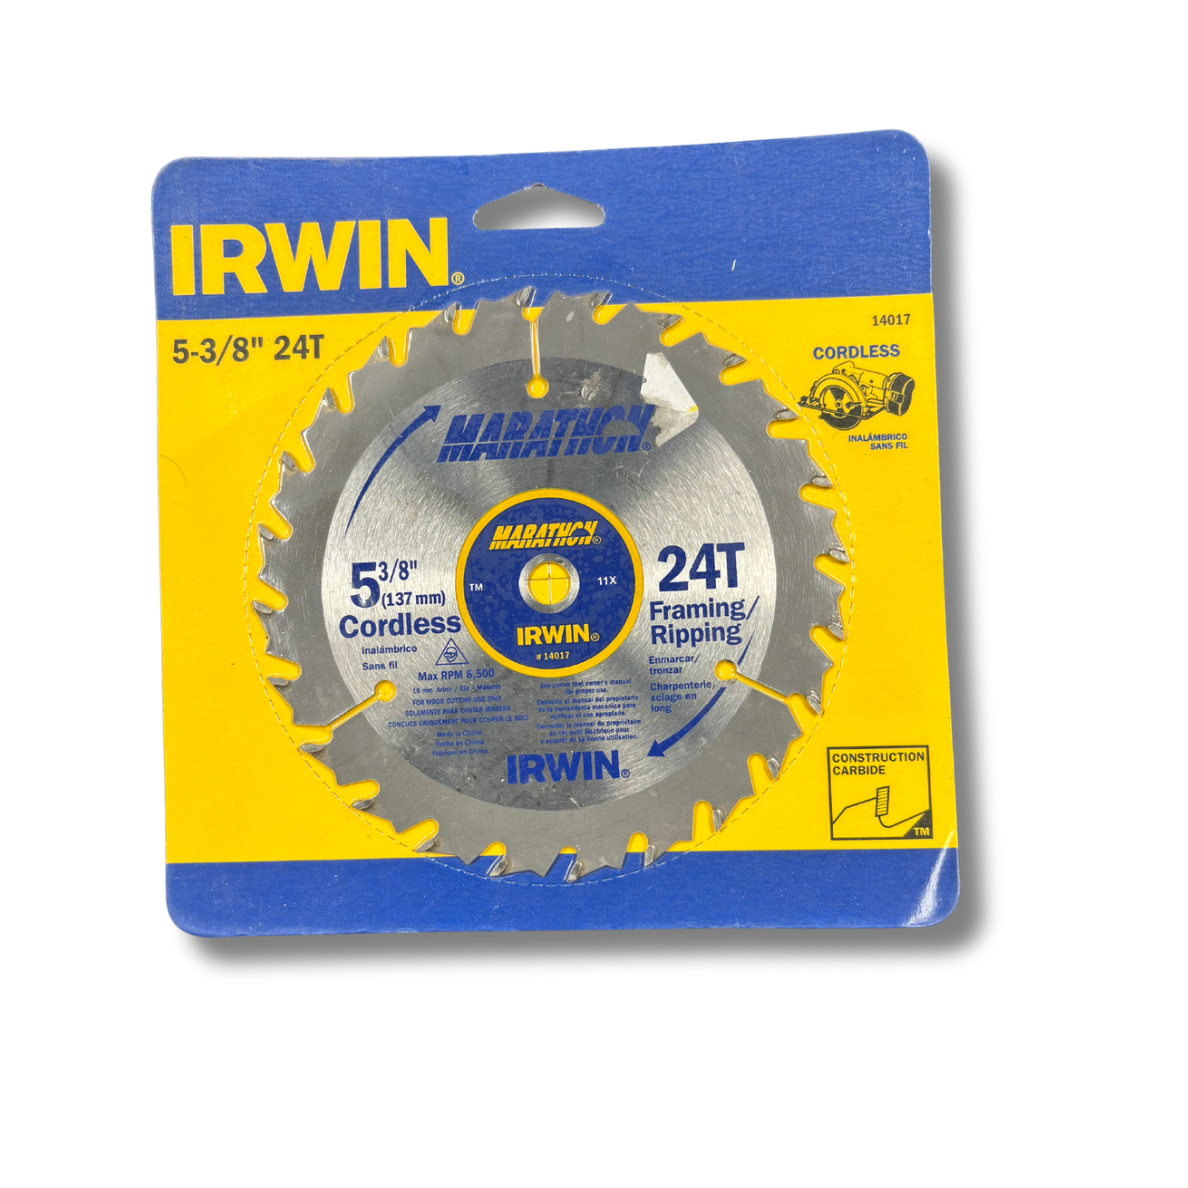 Irwin Marathon 14017 5-3/8" 24T Marathon Cordless Circular Saw Blade